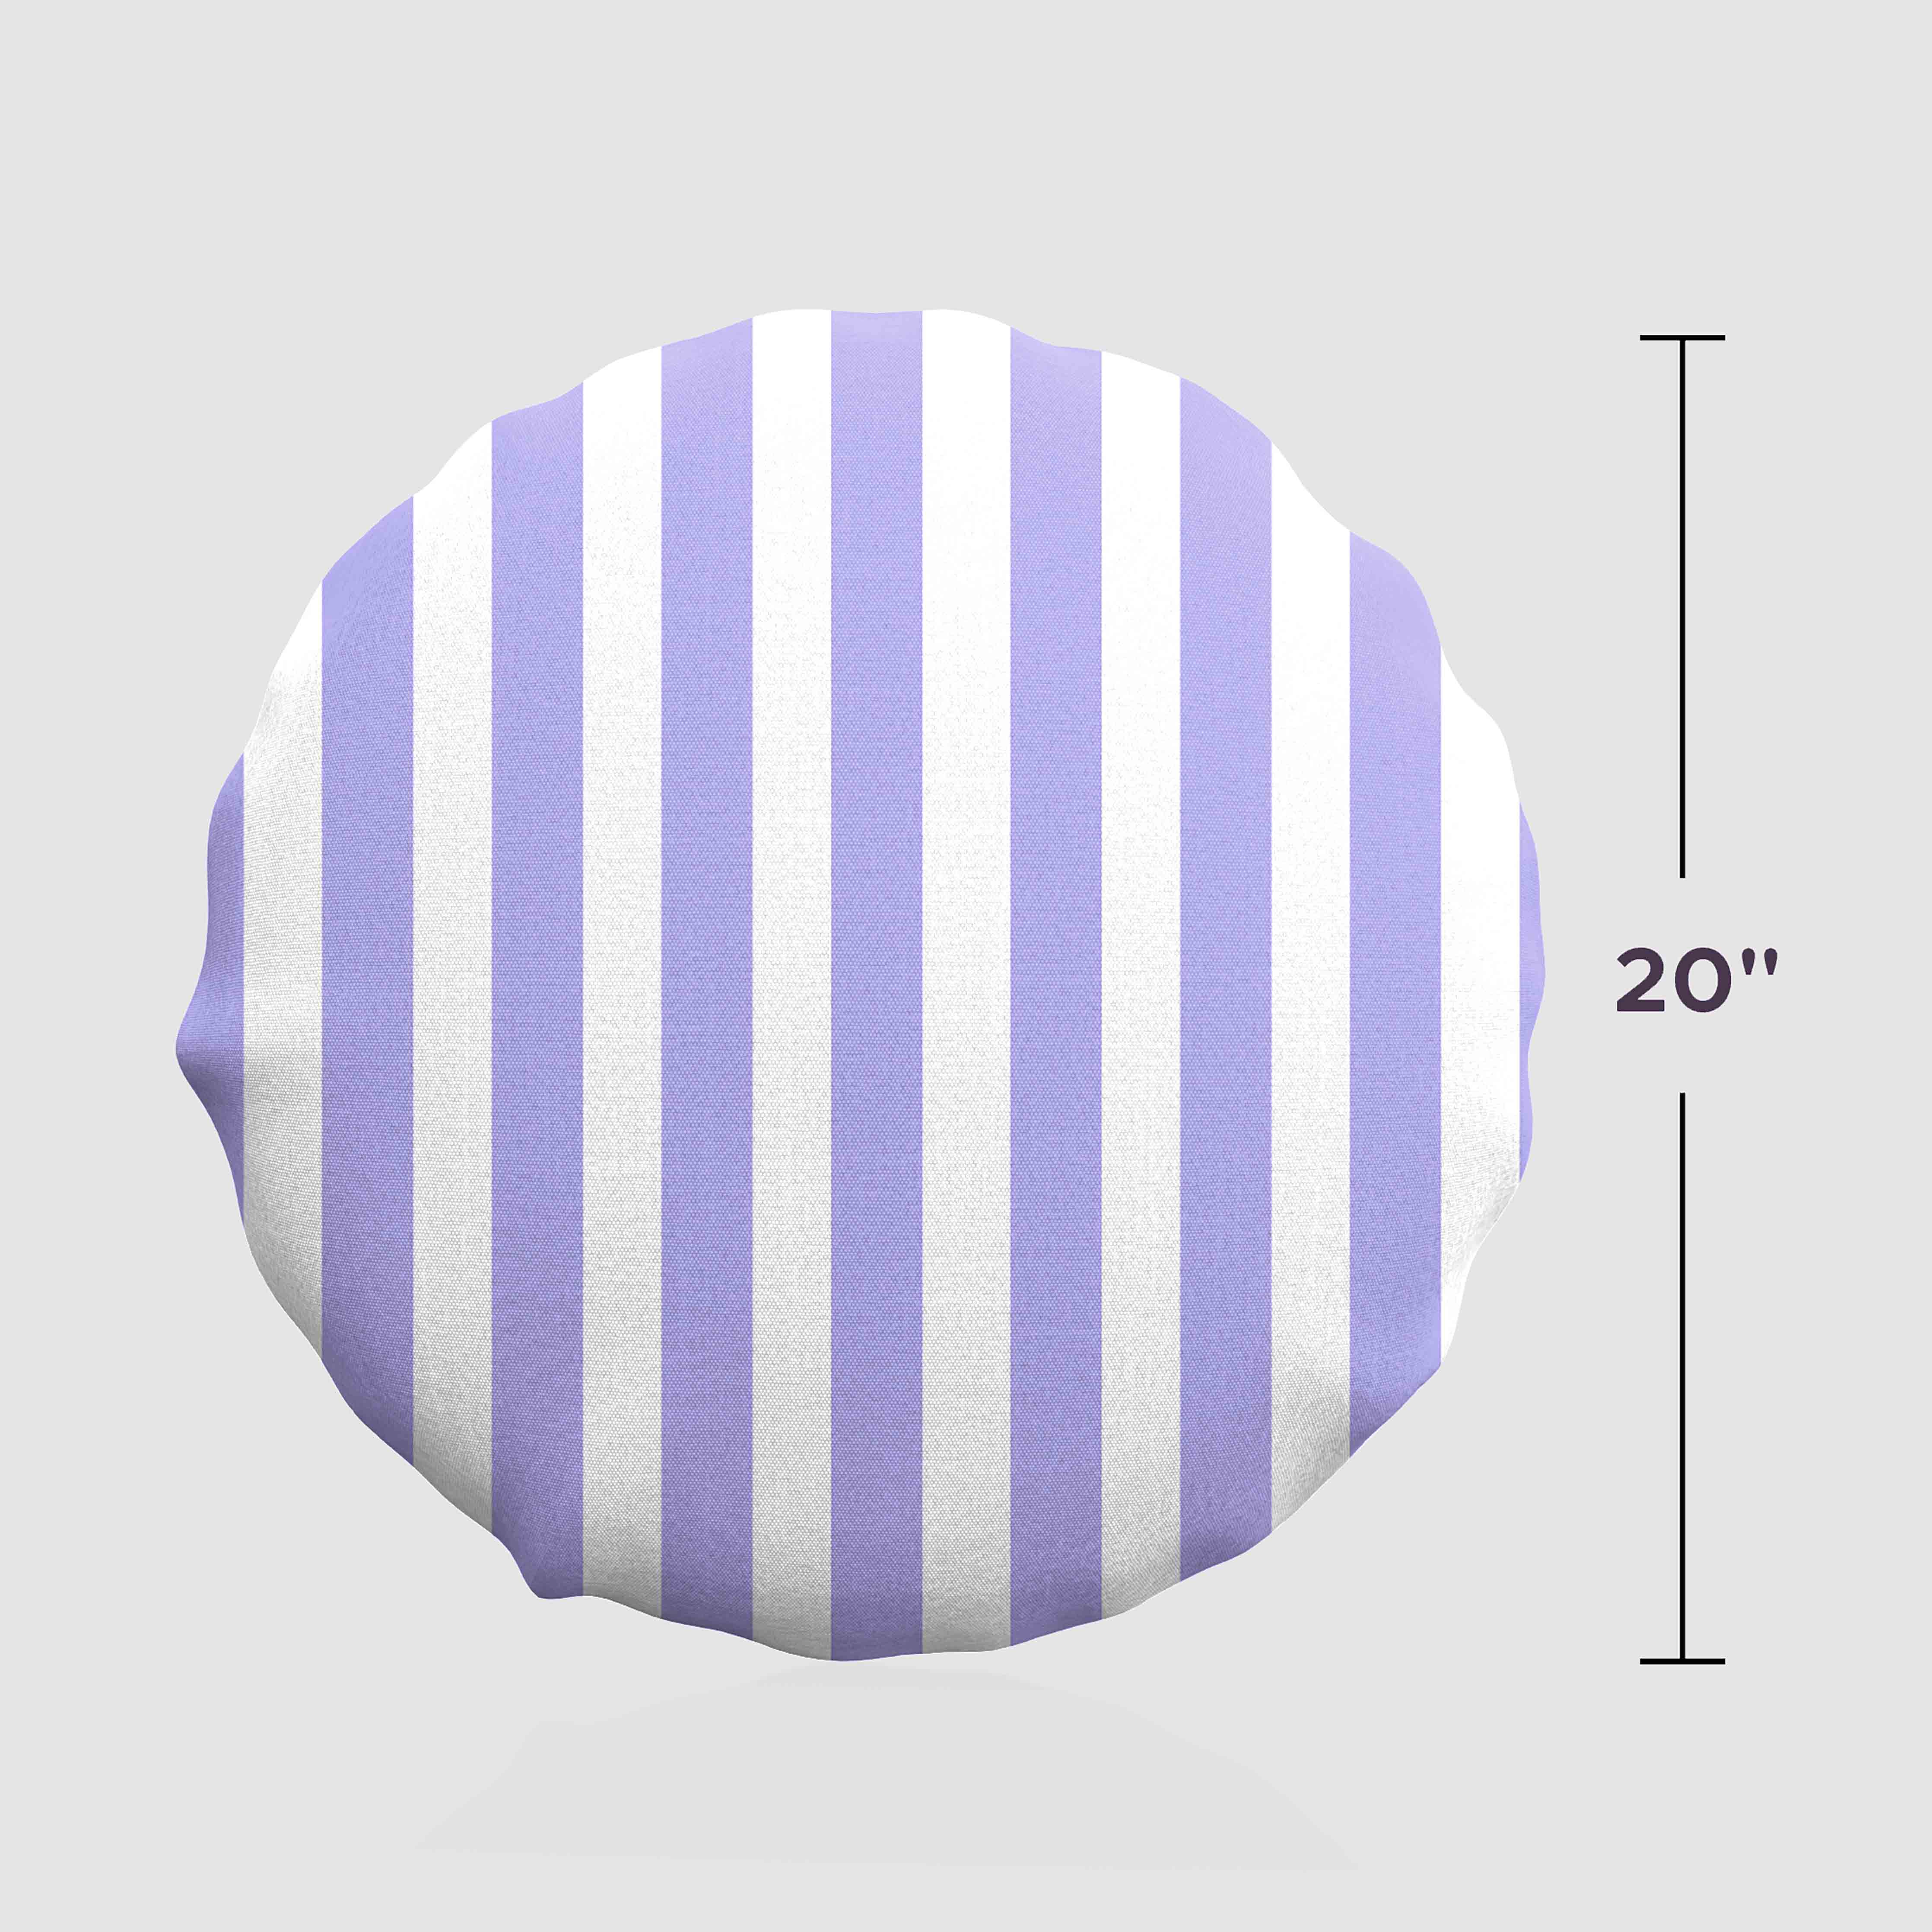 #size_20 in Diameter